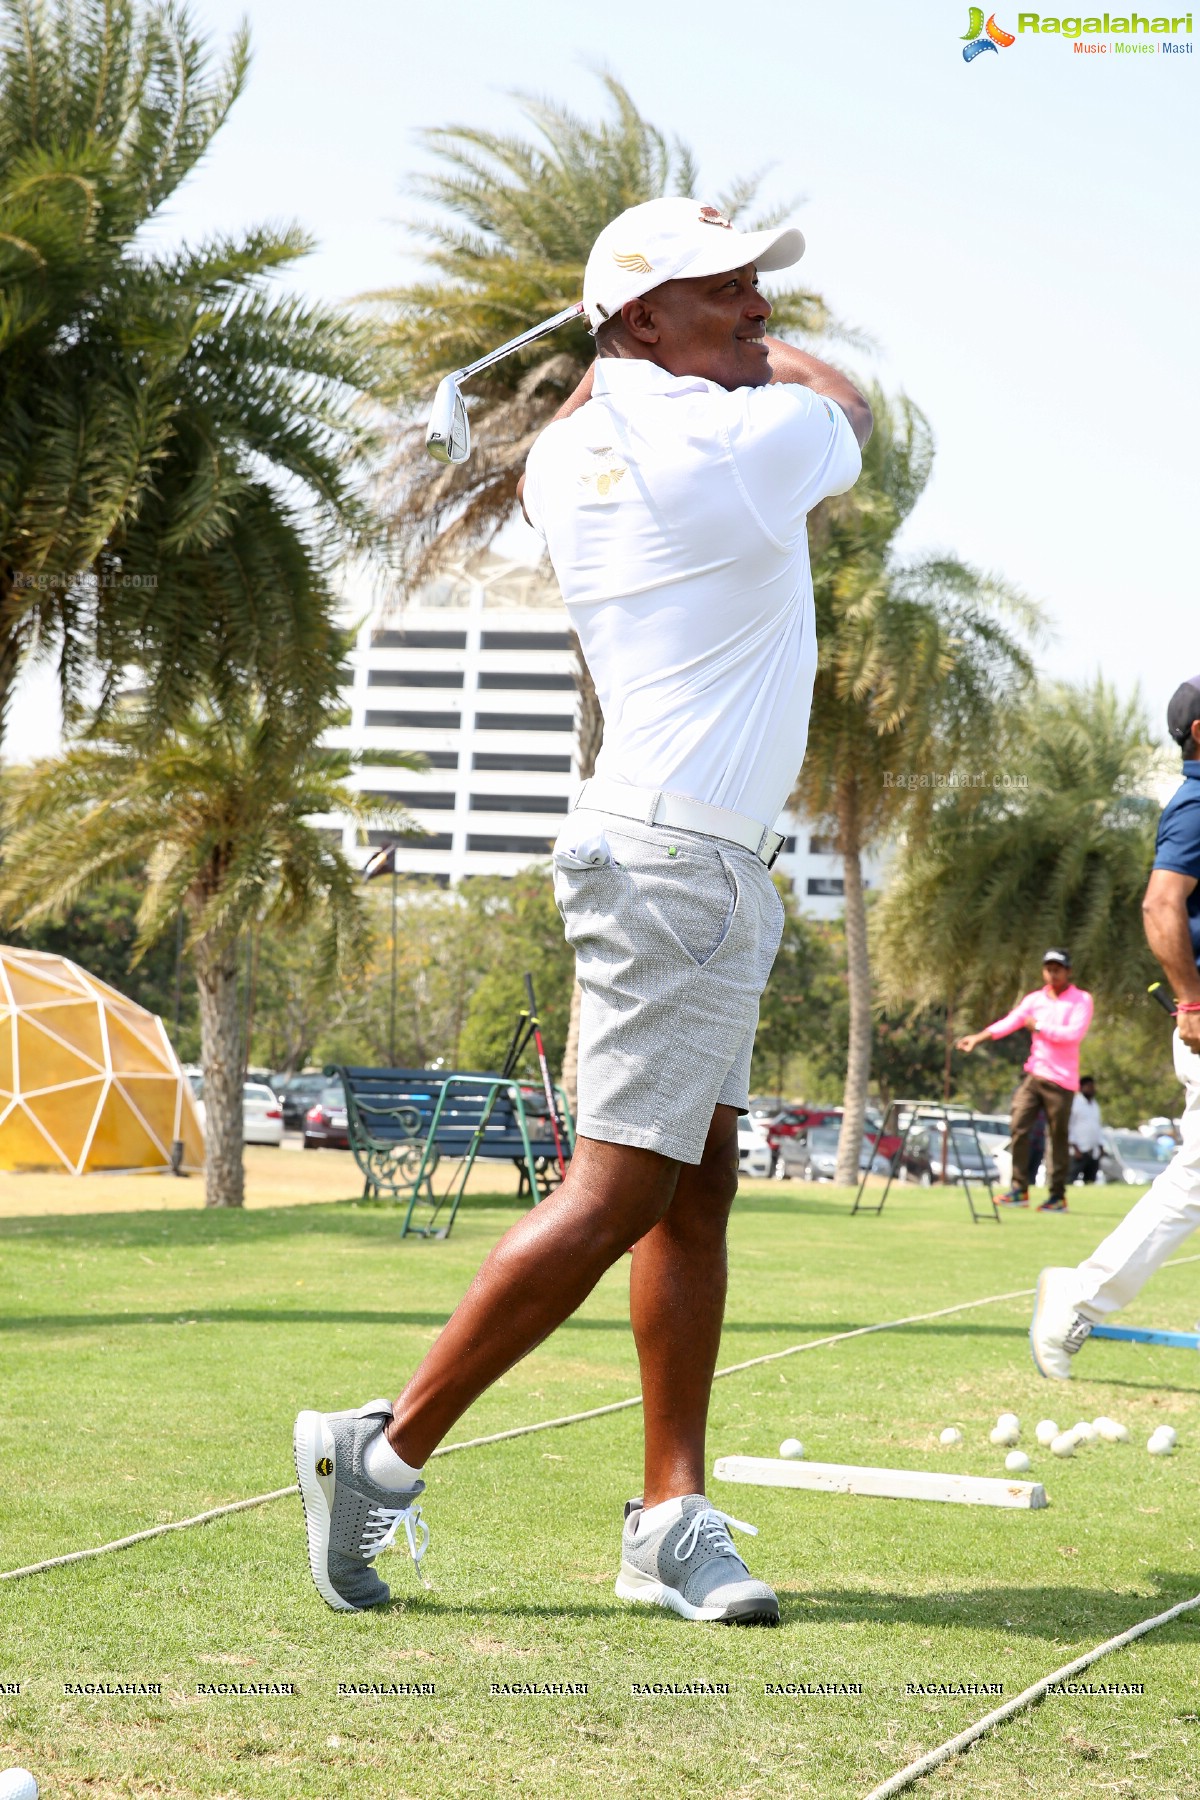 Krishnapatnam Port Hosts 4th edition of Golden Eagles Golf Championship in Hyderabad